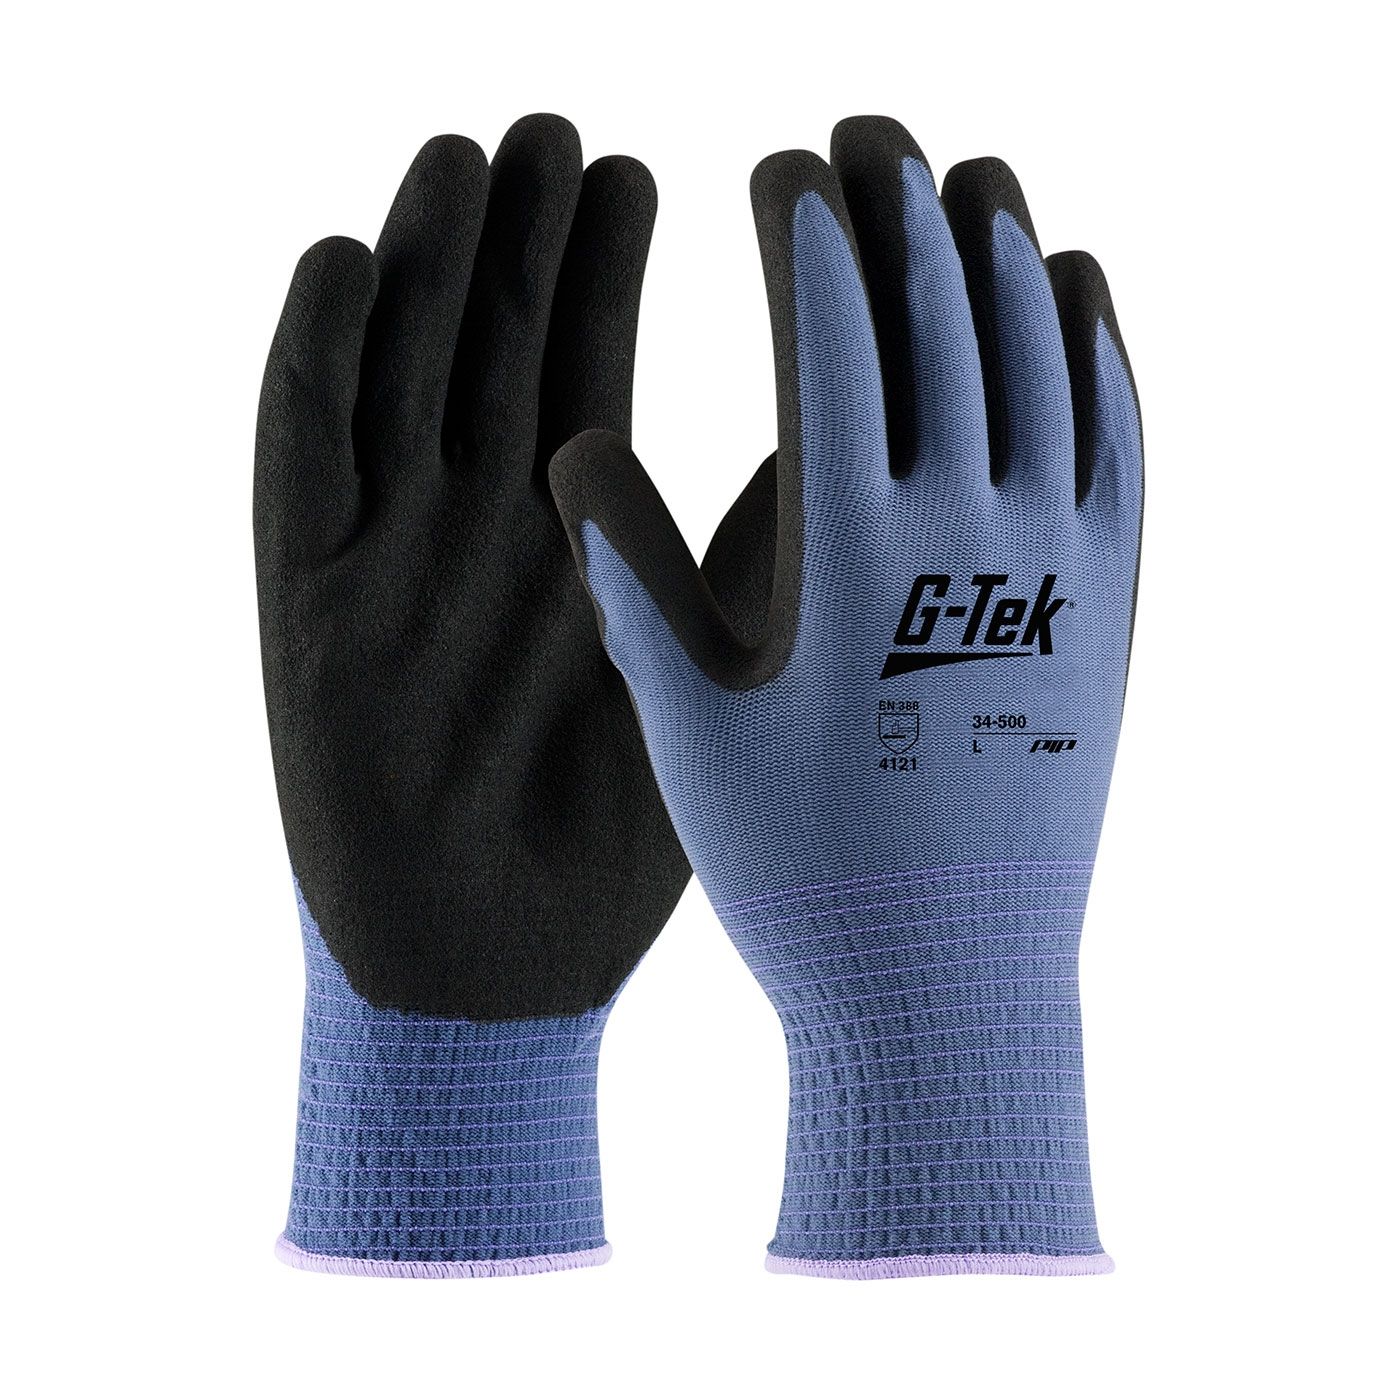 PIP G-Tek 34-500 AG Seamless Knit Gloves with Nitrile Coated MicroSurface Grip (1 Dozen)